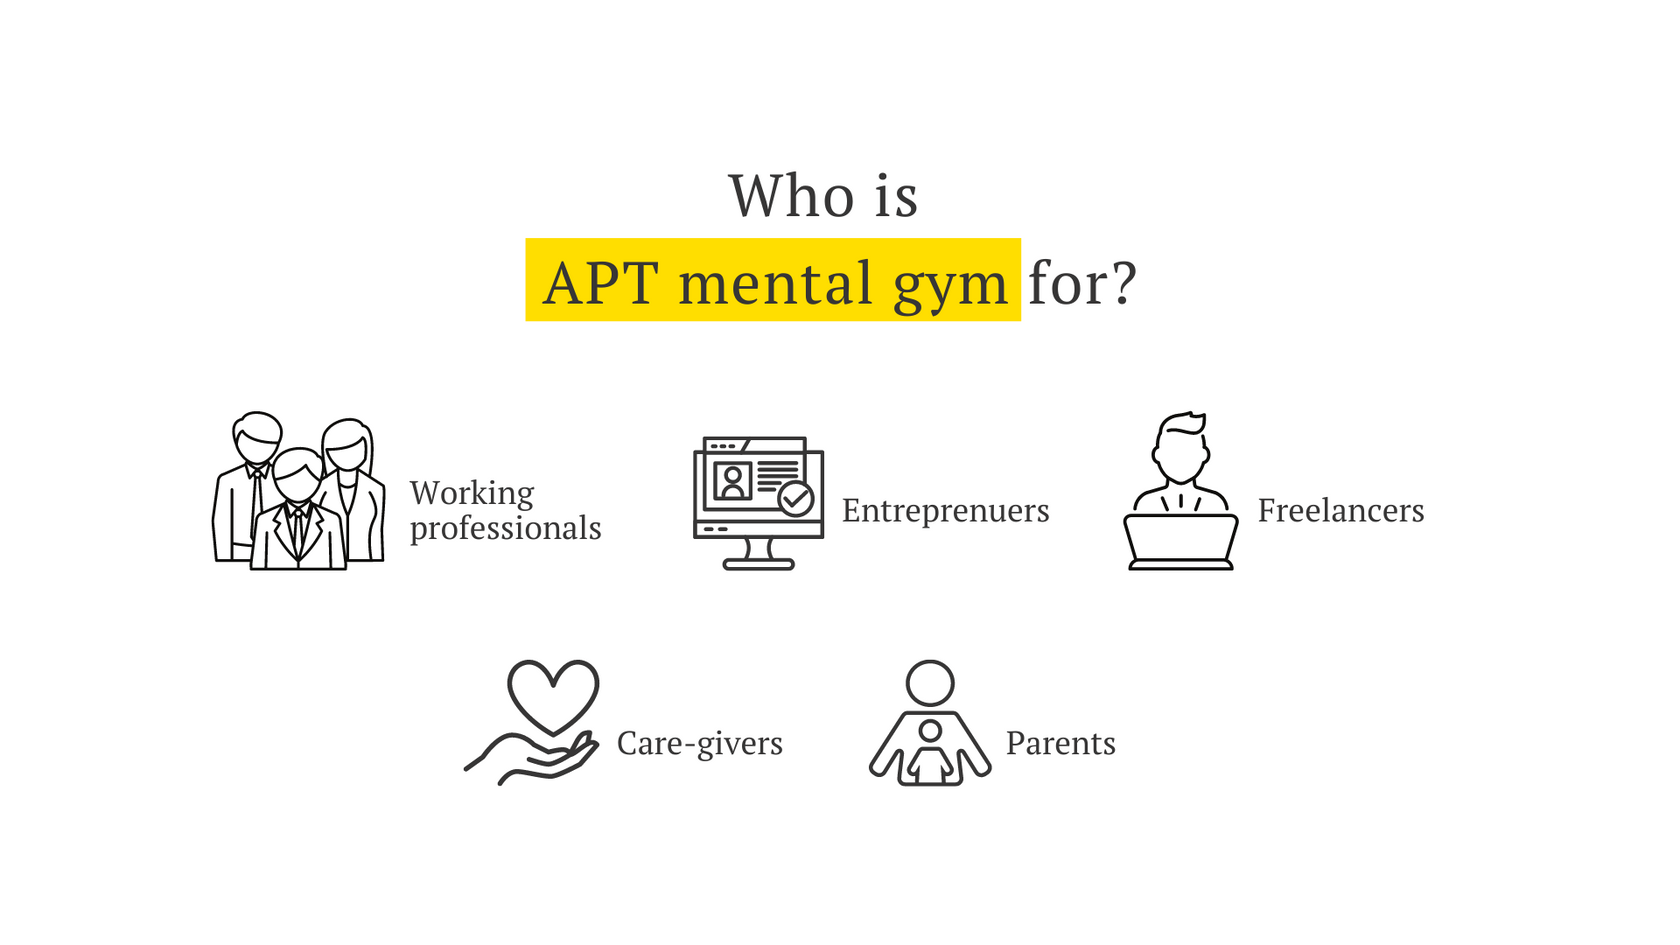 APT mental gym